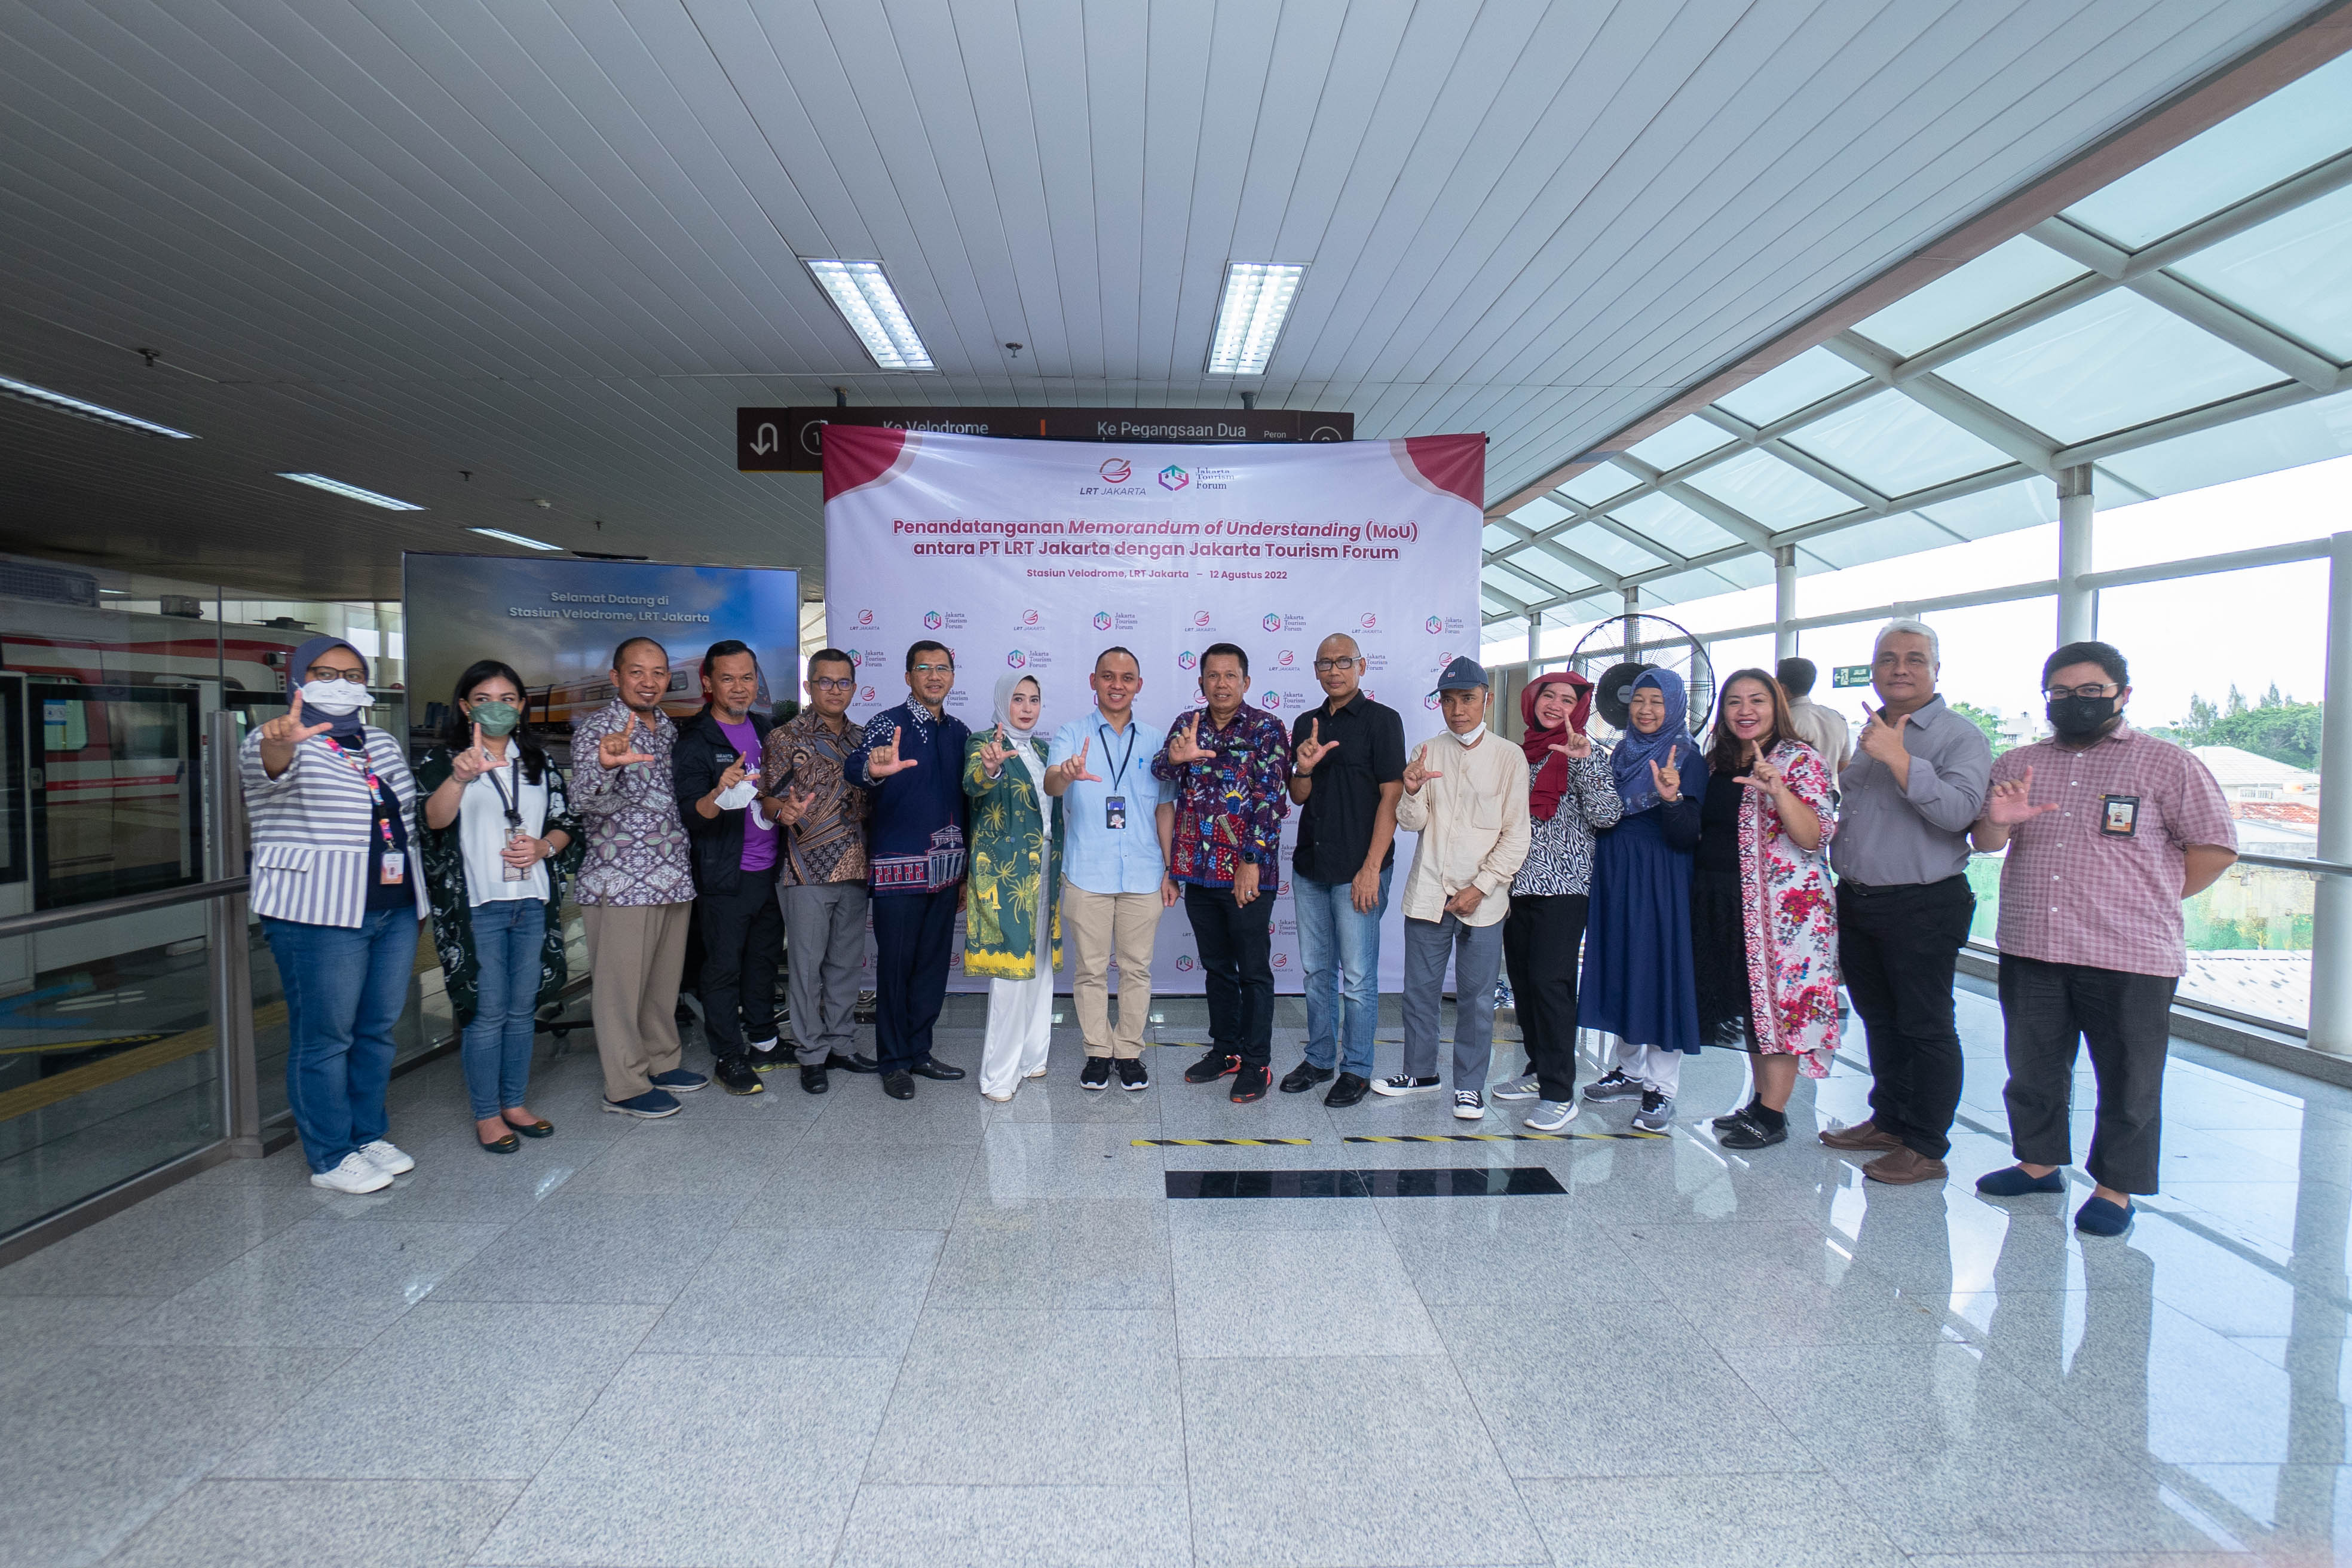 MoU LRTJ dengan JTF (Jakarta Tourism Forum)